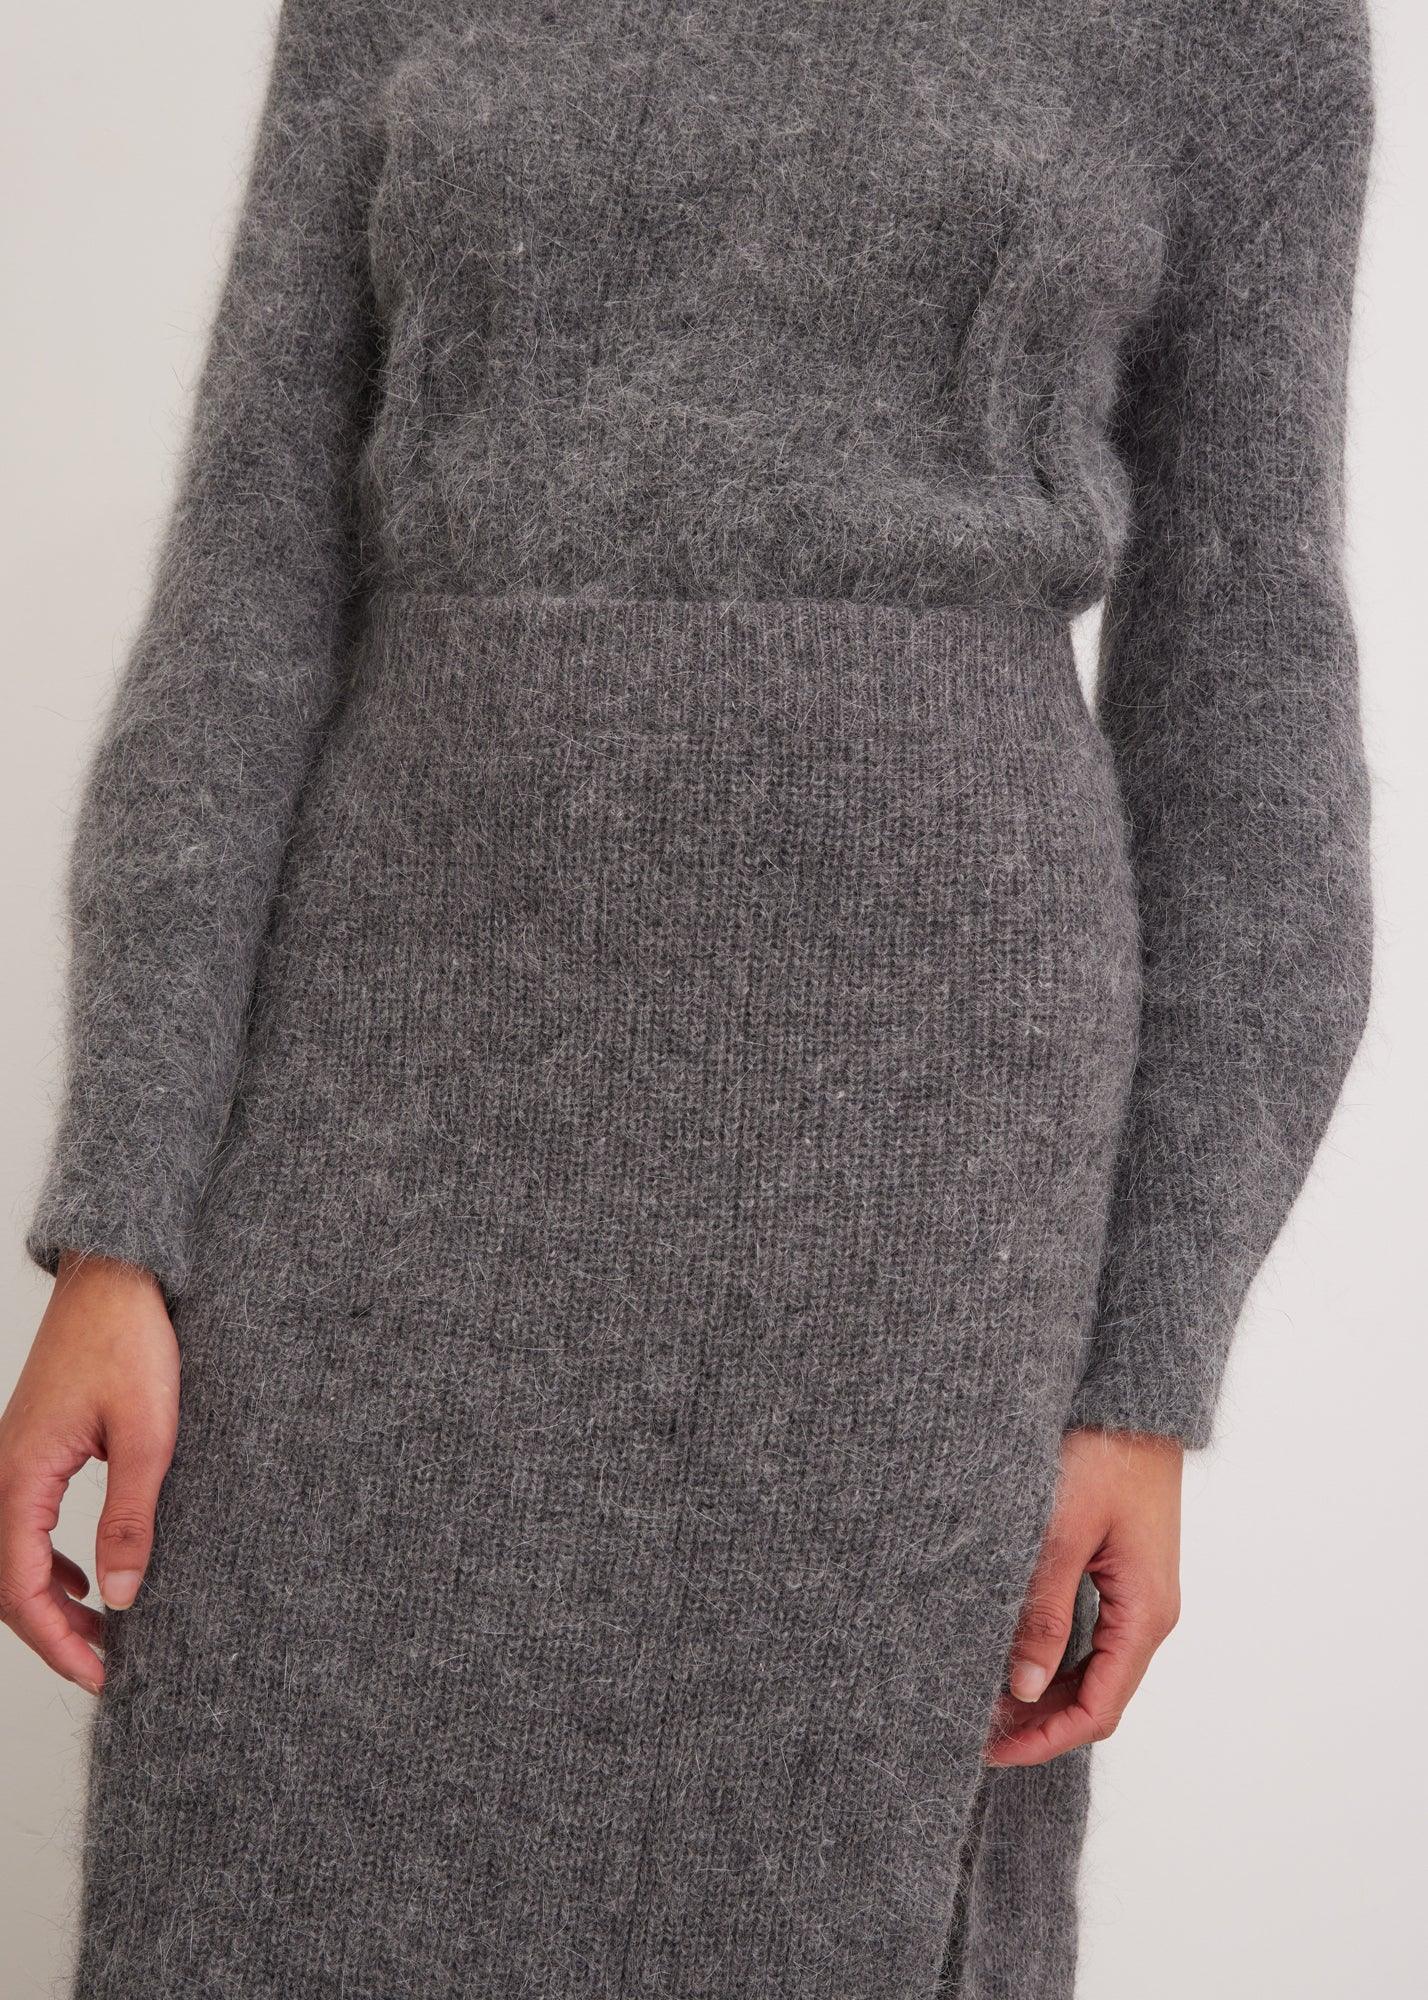 KNITEL grey angora skirt - SONI London